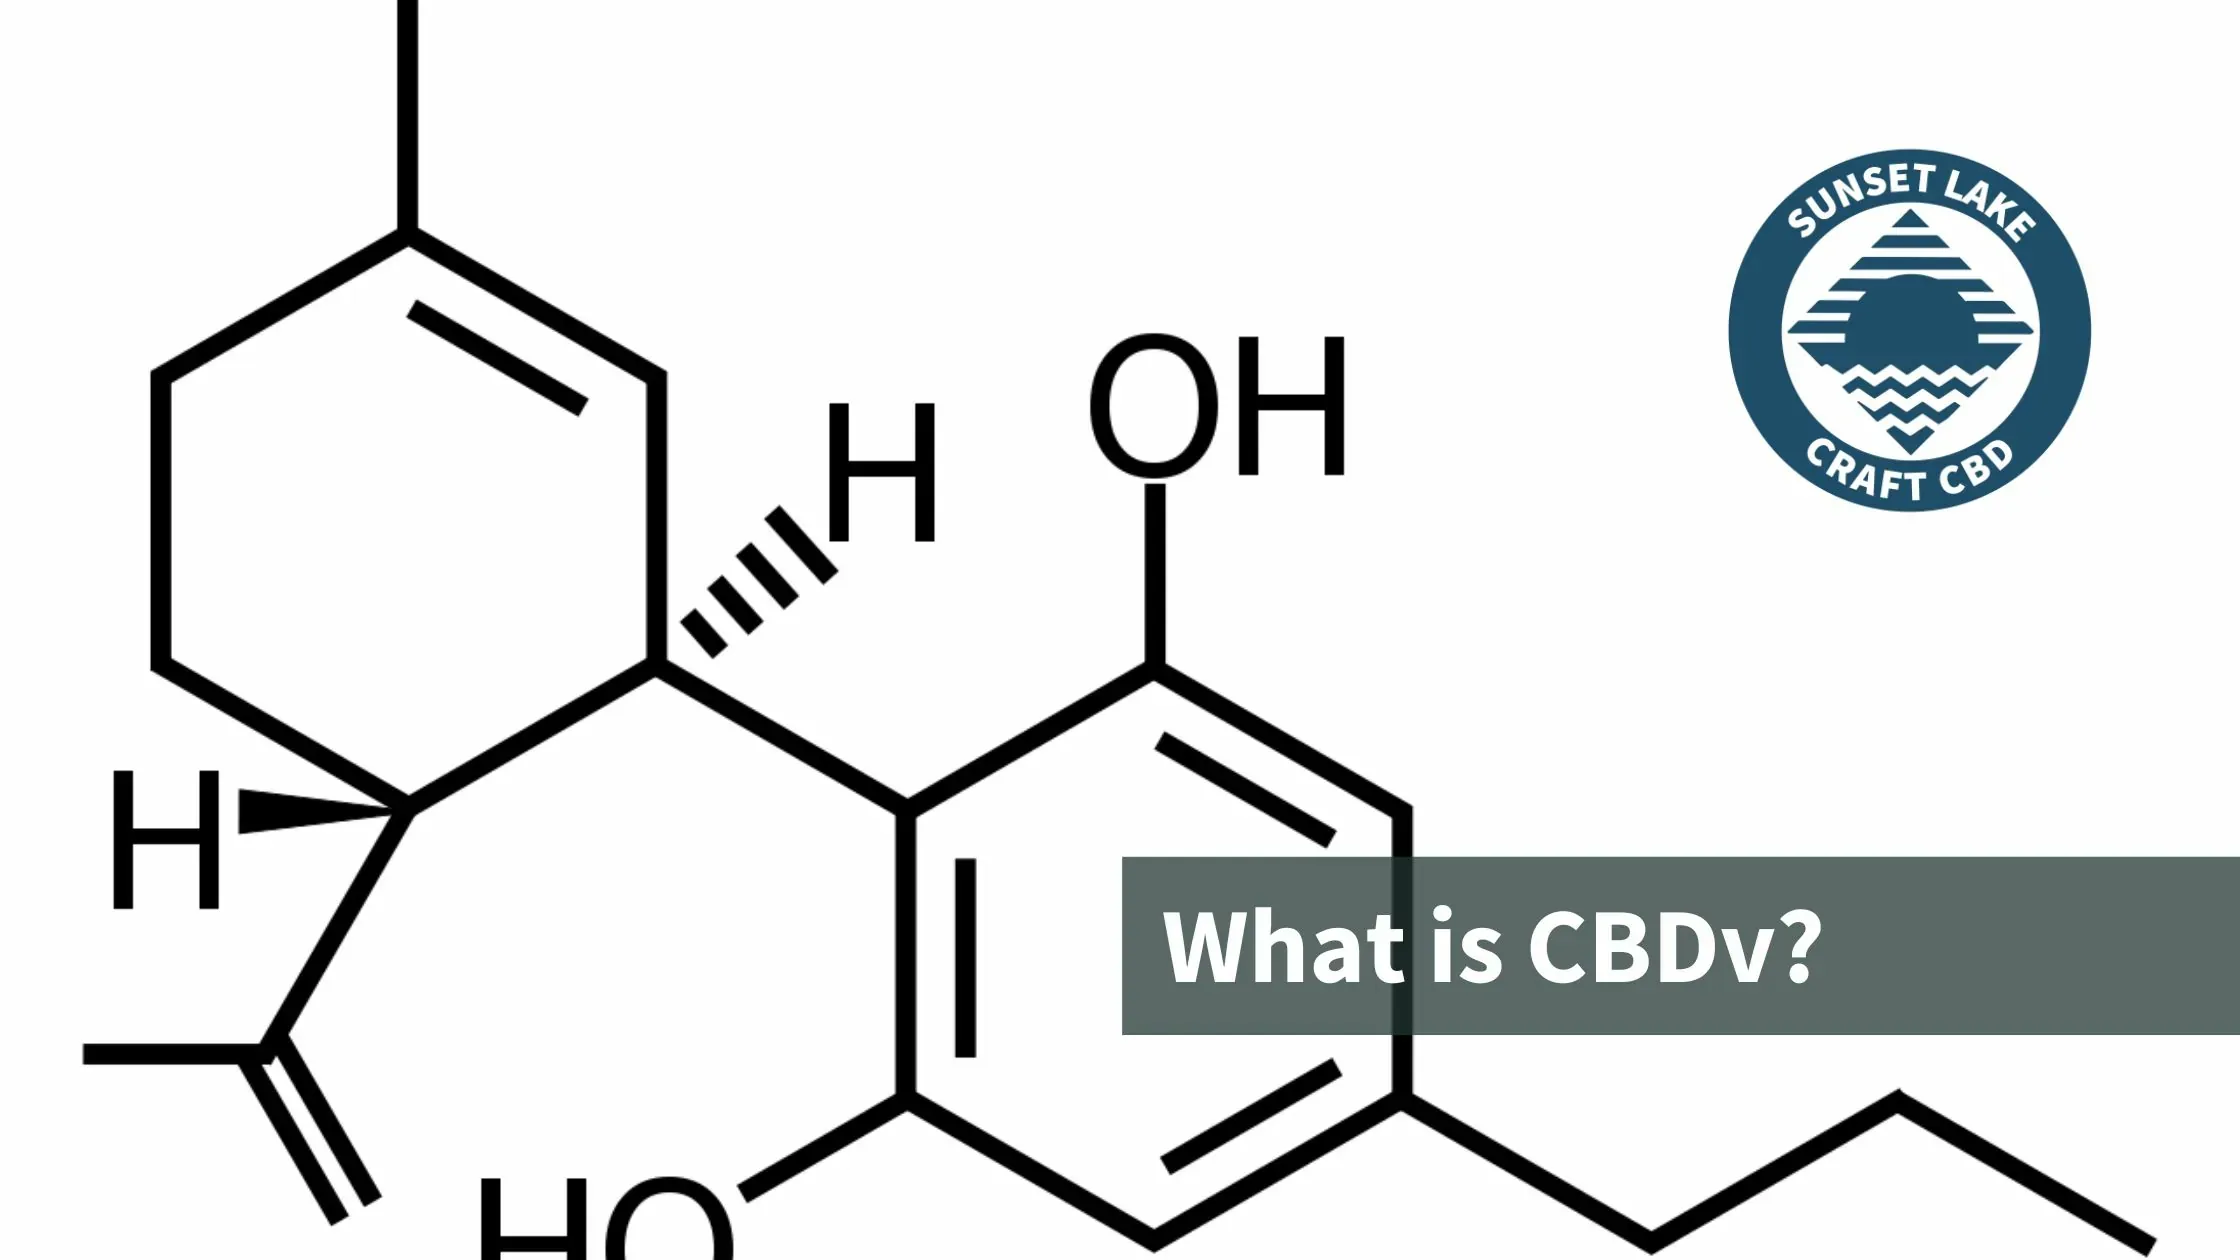 Diagram of CBDv molecule. Text reads "What is CBDv?"